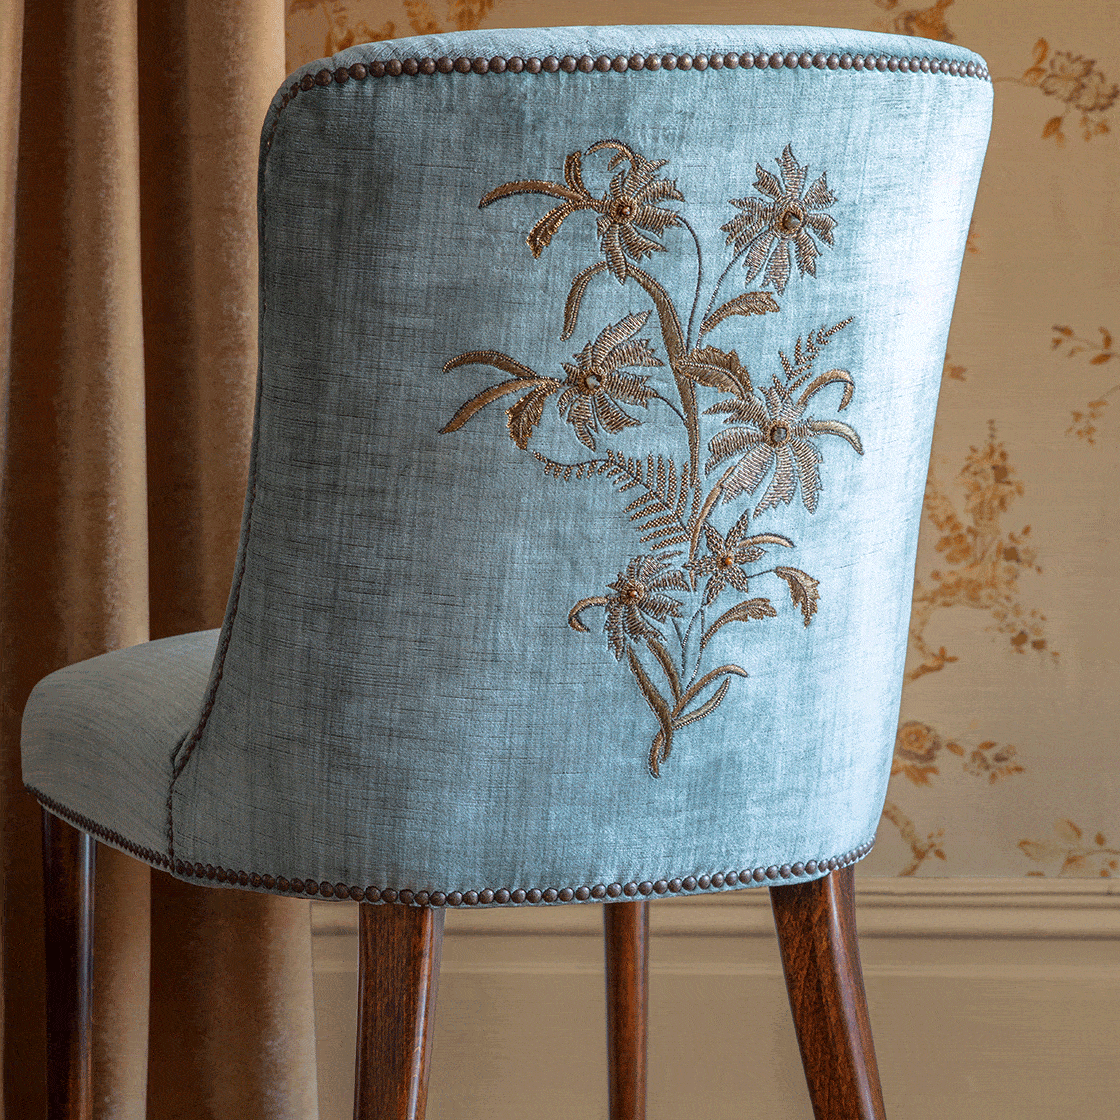 Isolde embroidery on Como silk velvet - Teal